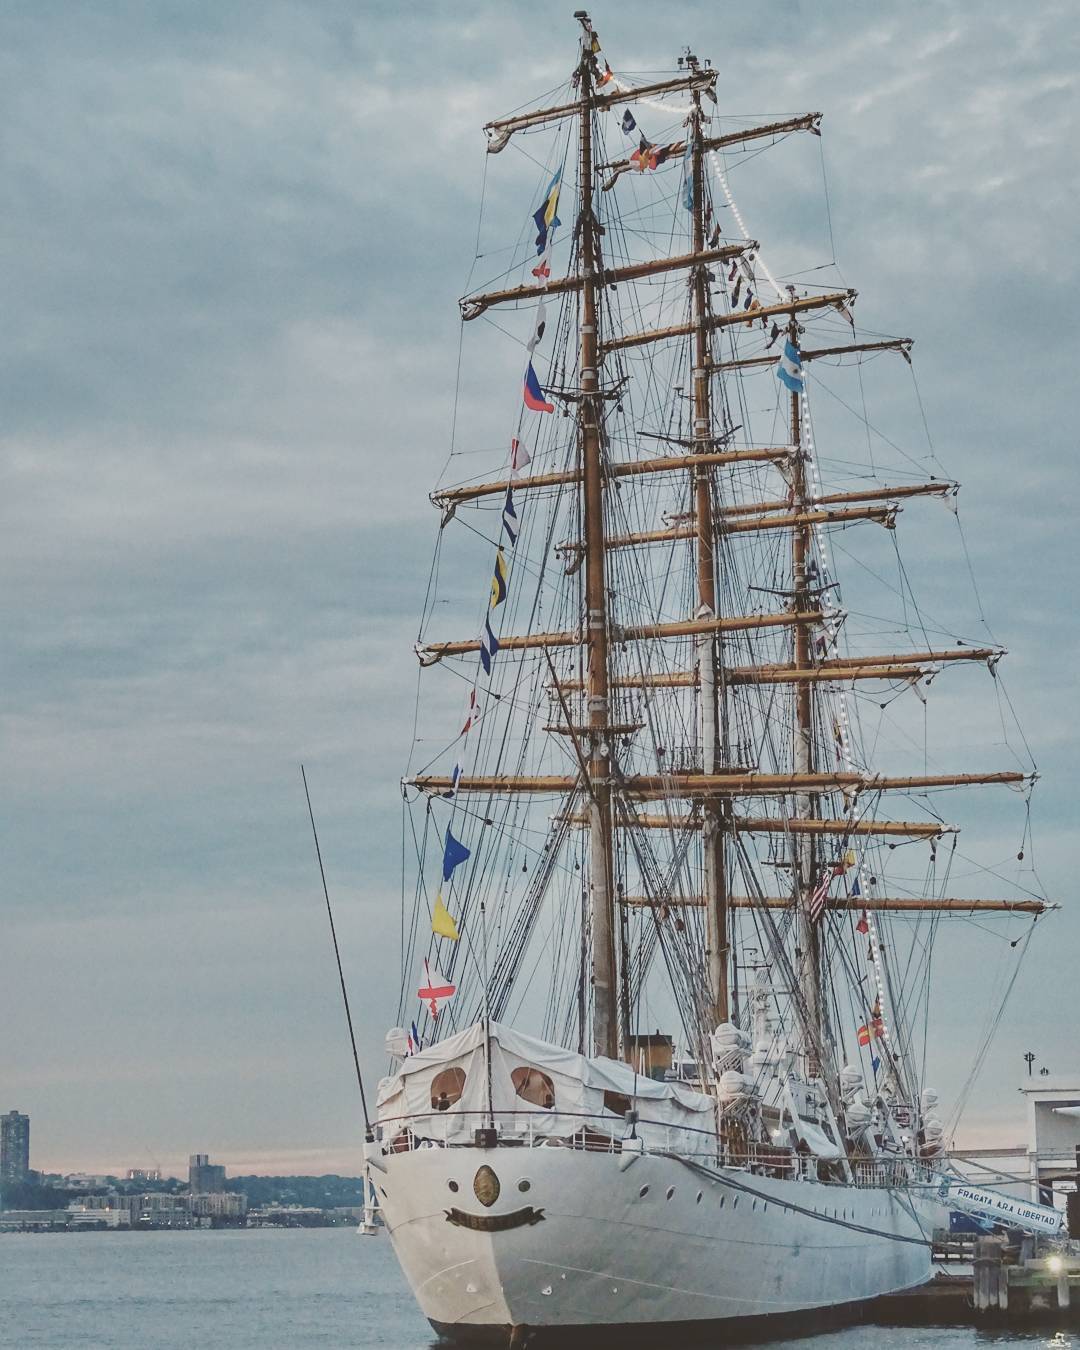 apple-steve:
“Fragata Libertad at pier 86 nyc
#fragatalibertad #argentine #navy #sailing #pier86 #outdoorphotography #nyc #newyorkcity #nyloveyou #newyork_true #ilovenyc #ilovenewyork #random #instagramnyc #igersofnyc #communityfirst #visualsofny...